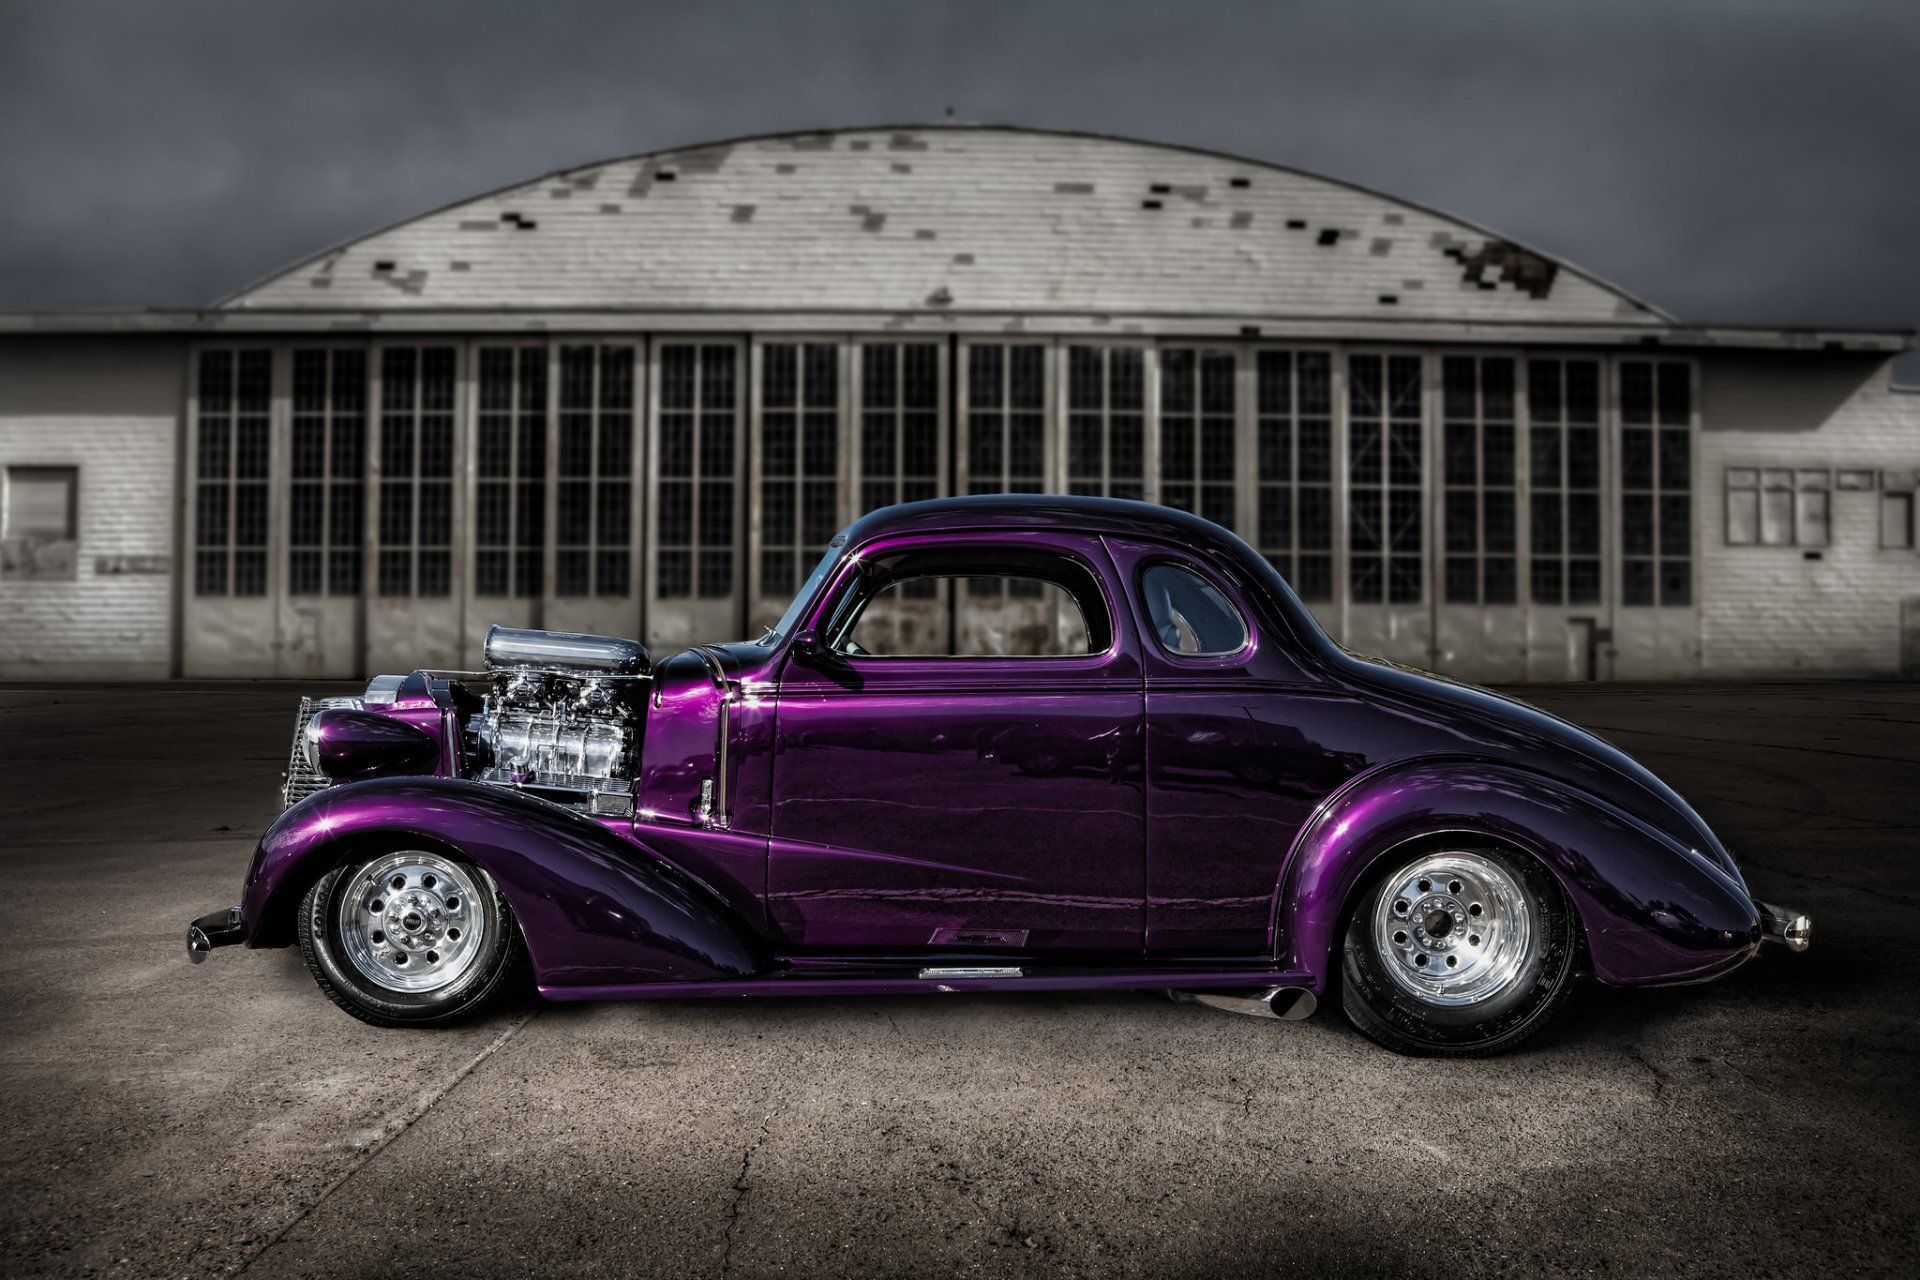 Hot Rod Classic Car Purple Classic Retro Street HD Wallpaper. Classic Cars, Hot Rods, Car